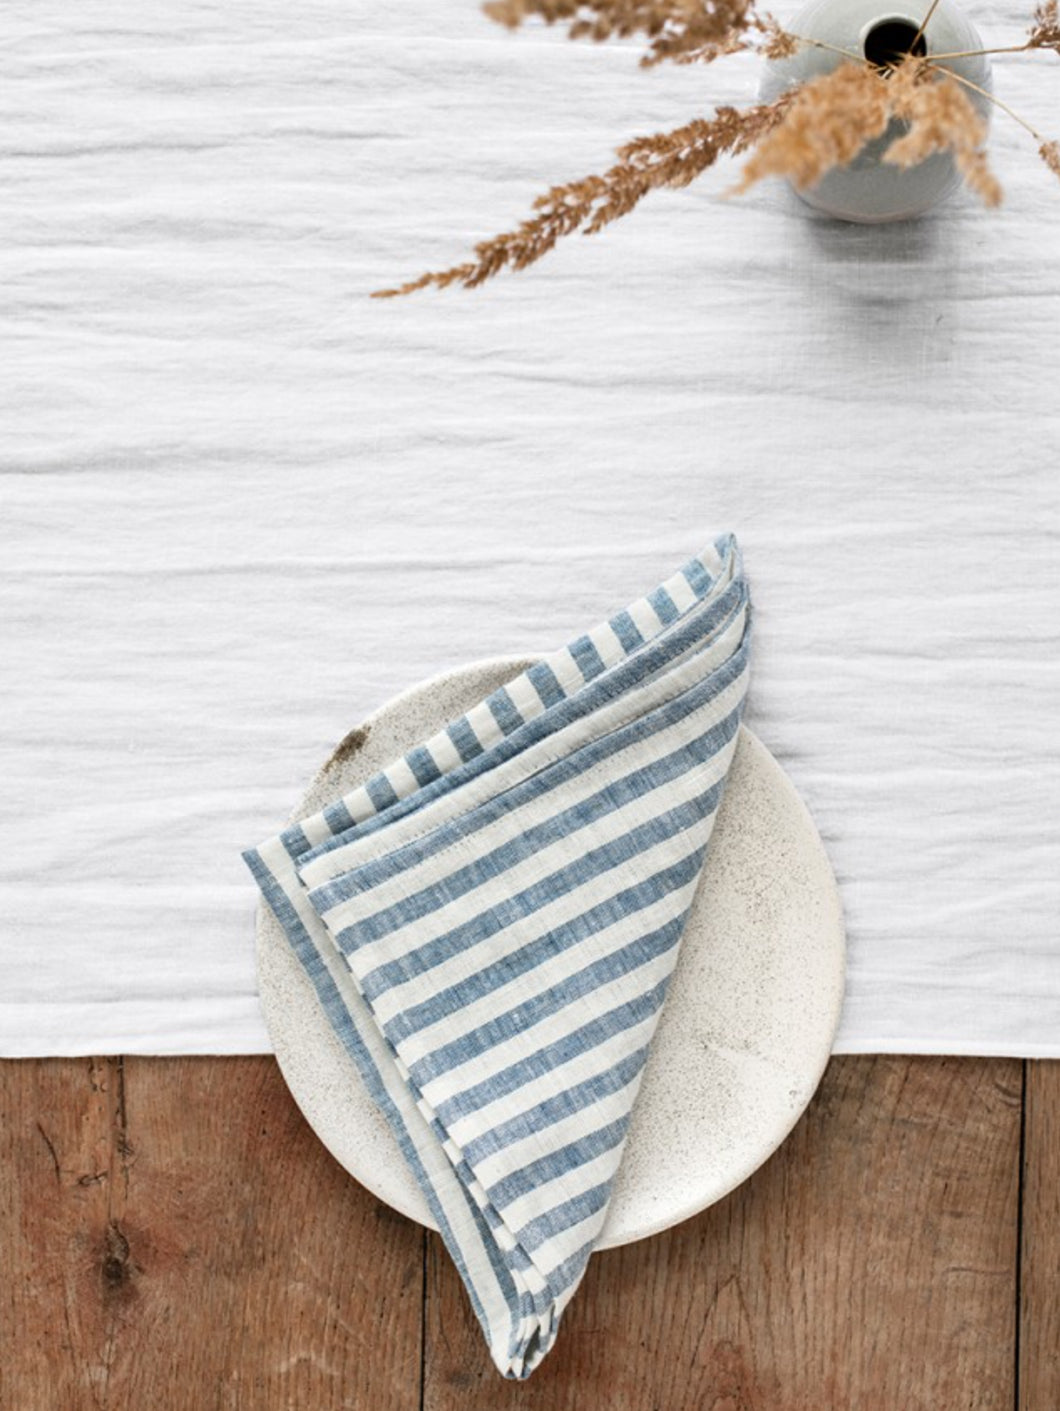 Organic Linen Napkin Set of 4 - Blue and White Stripe